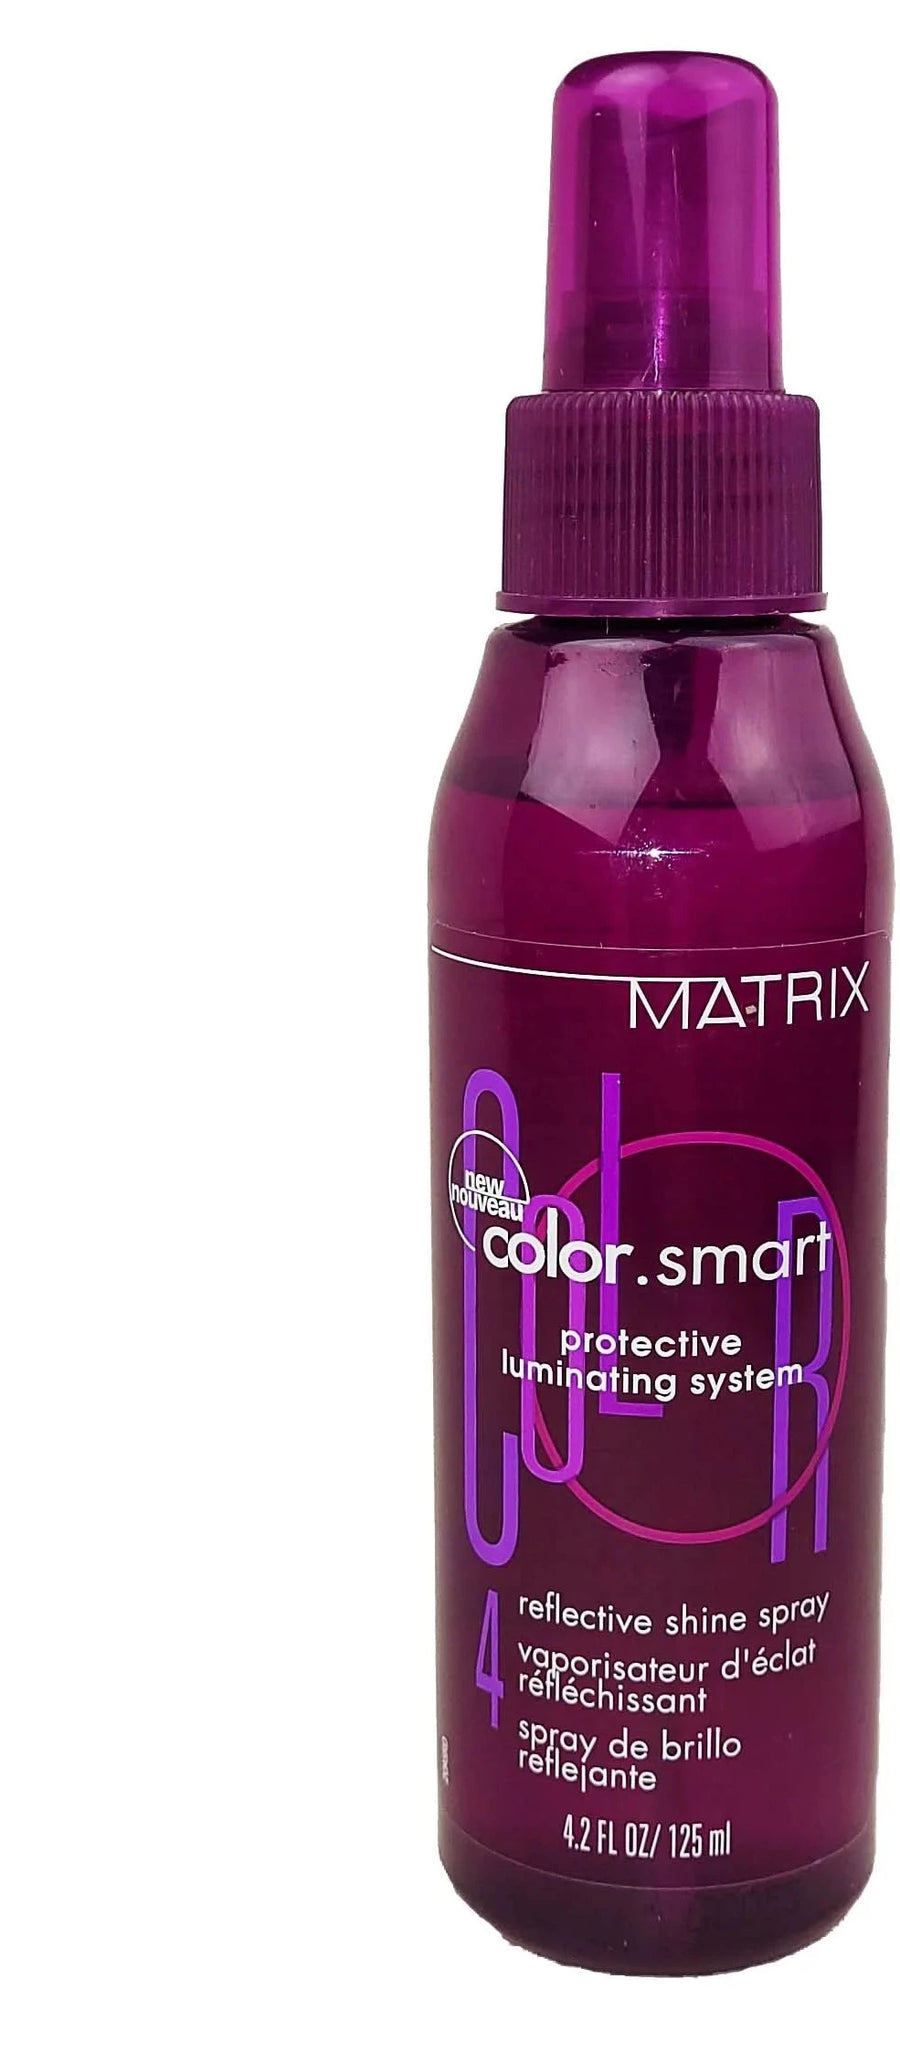 Matrix Color Smart Protective Luminating System Reflective Shine Spray image of 4.2 oz bottle